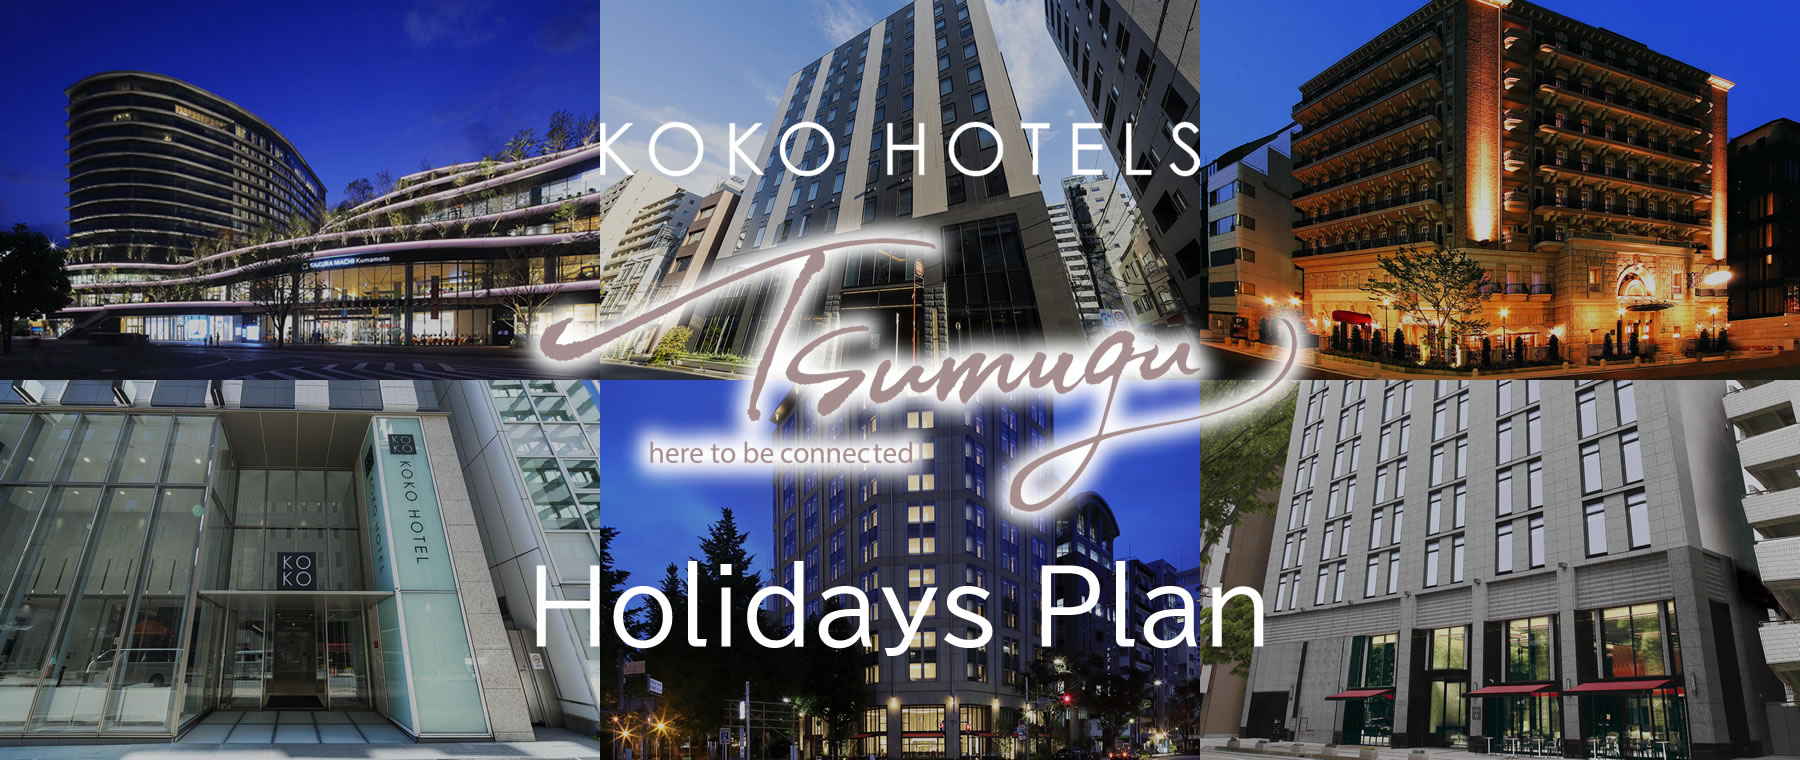 KOKO HOTEL★Tsumugu holidays plan 販売開始｜KOKO HOTELS